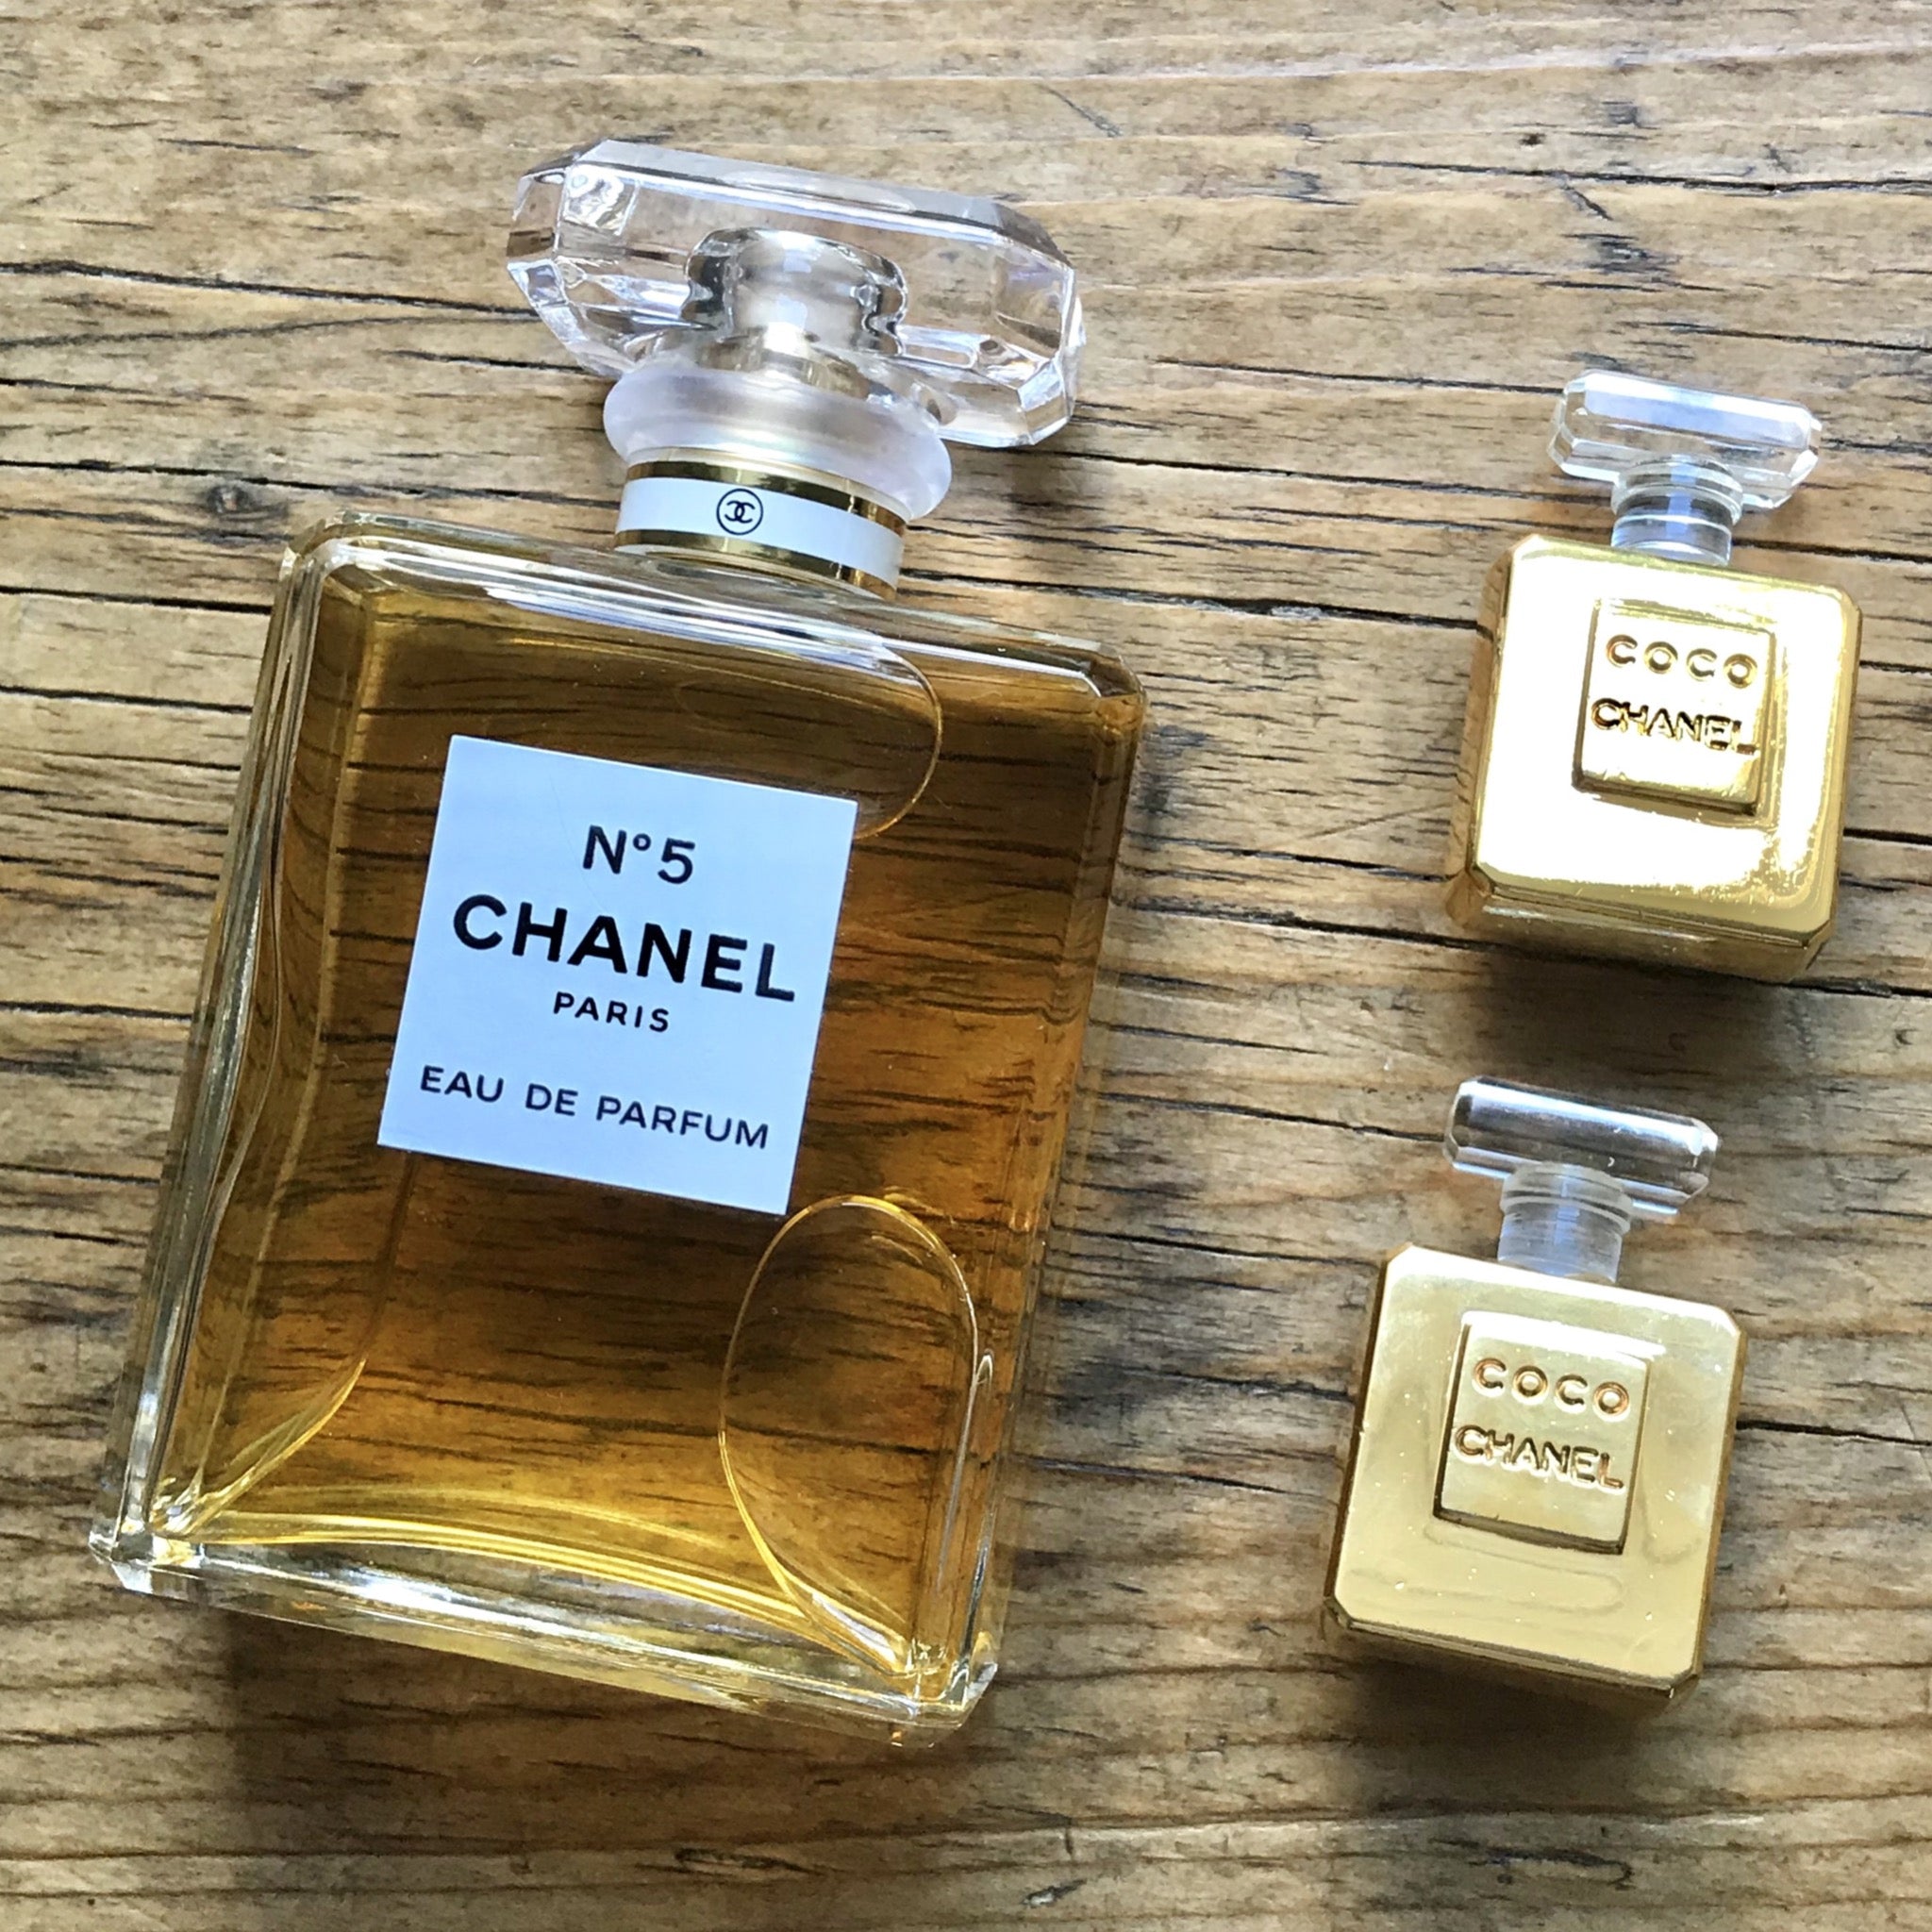 vintage chanel no. 5 perfume bottle